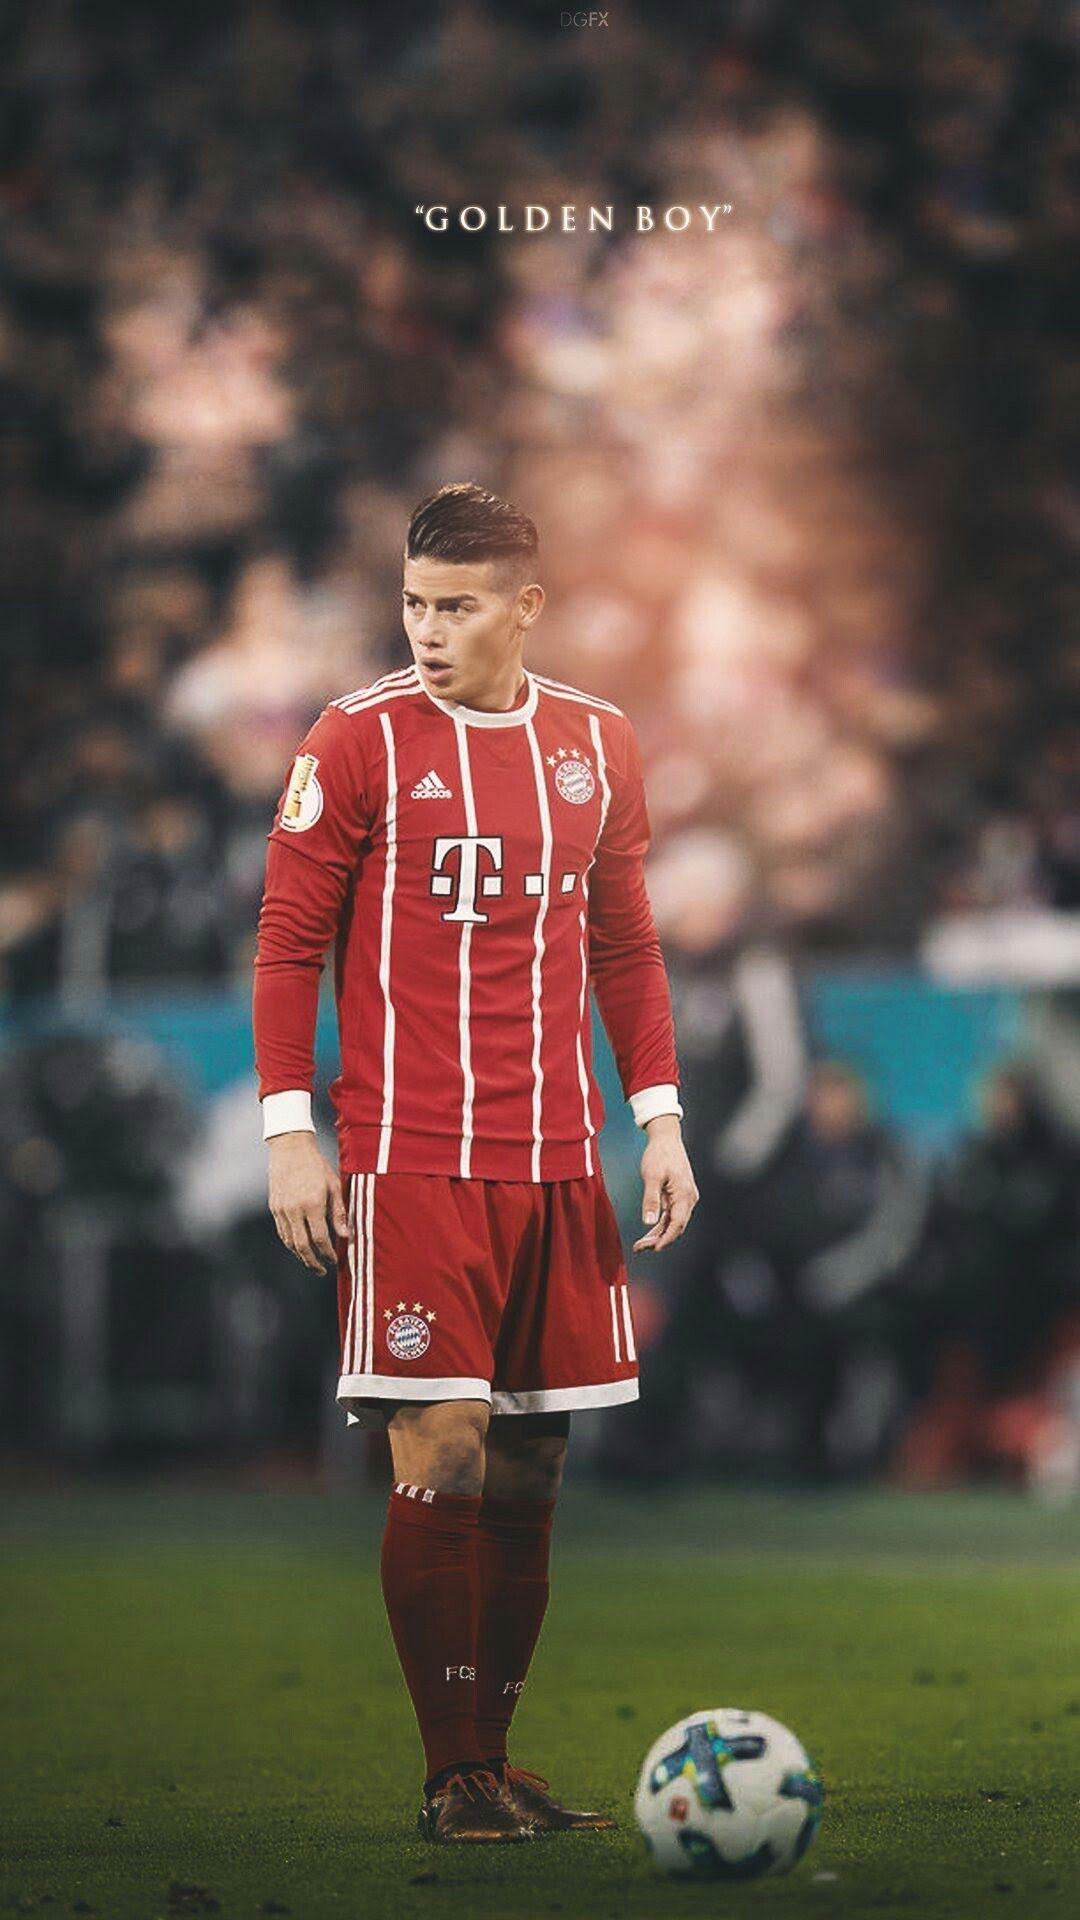 James Rodriguez -Bayern München. The Beautiful Game